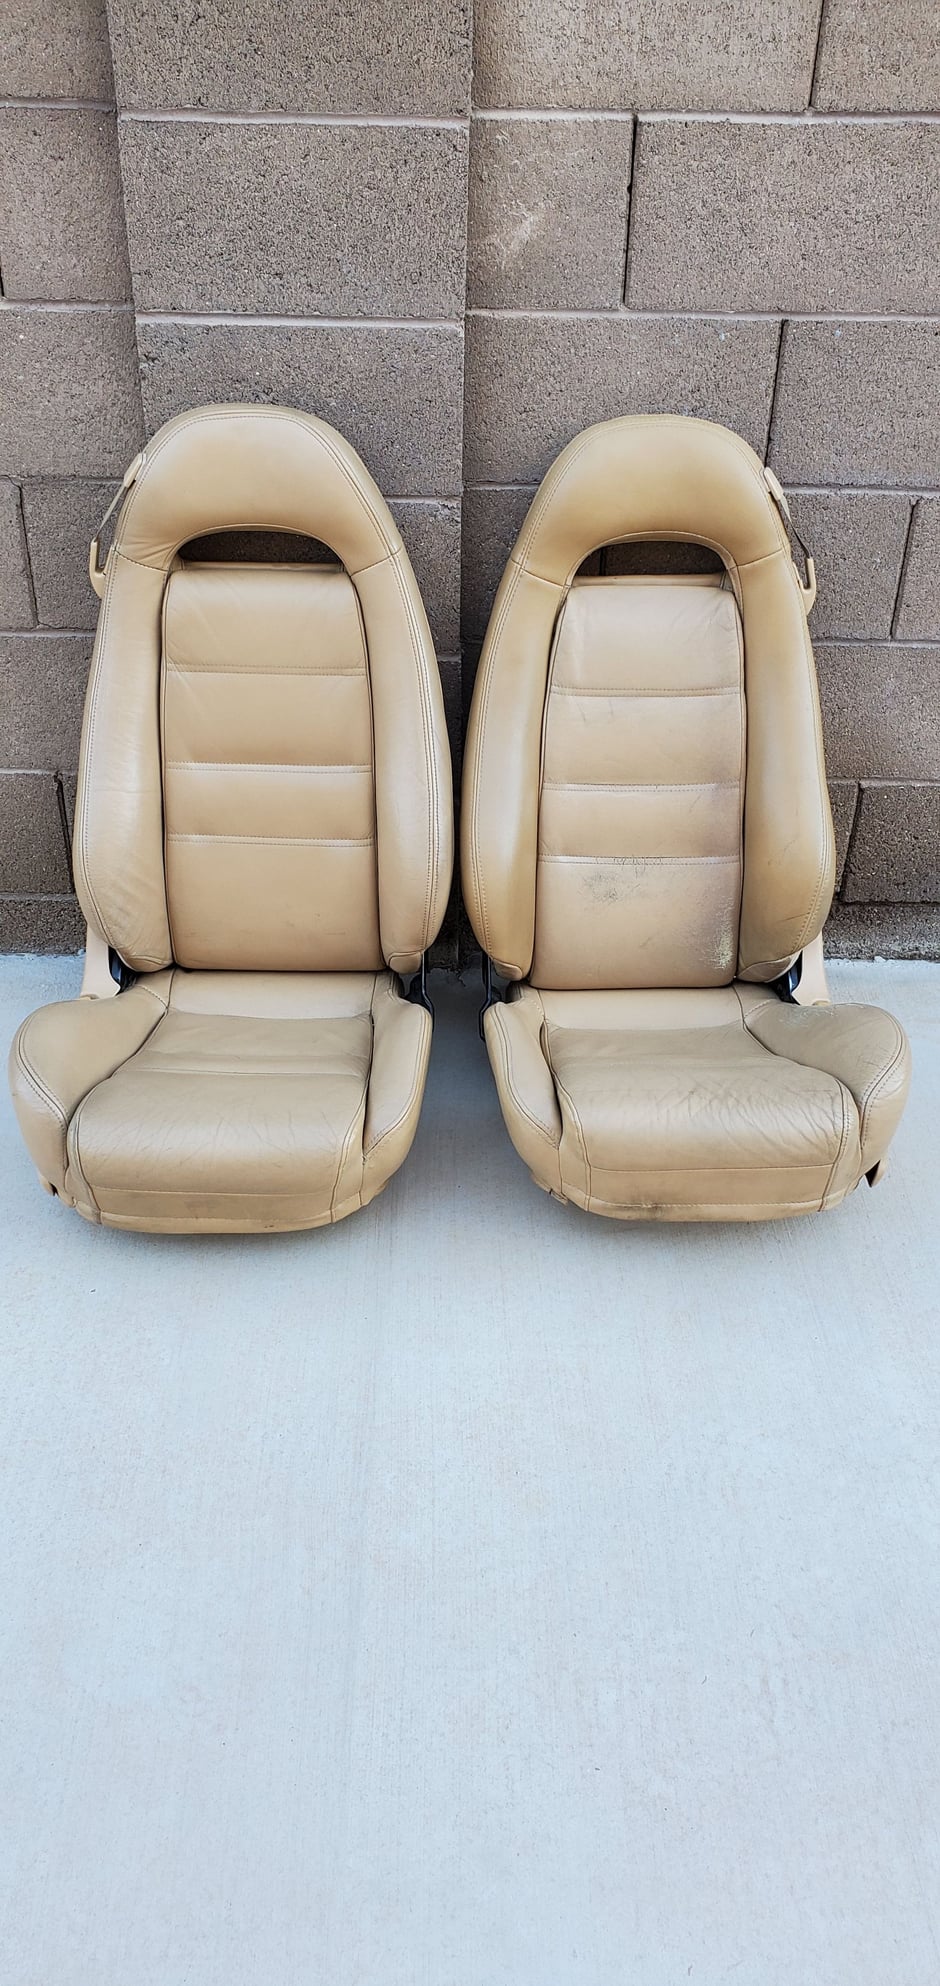 Interior/Upholstery - Tan 1993 FD Seats - Used - 1993 to 2002 Mazda RX-7 - Yuma, AZ 85364, United States